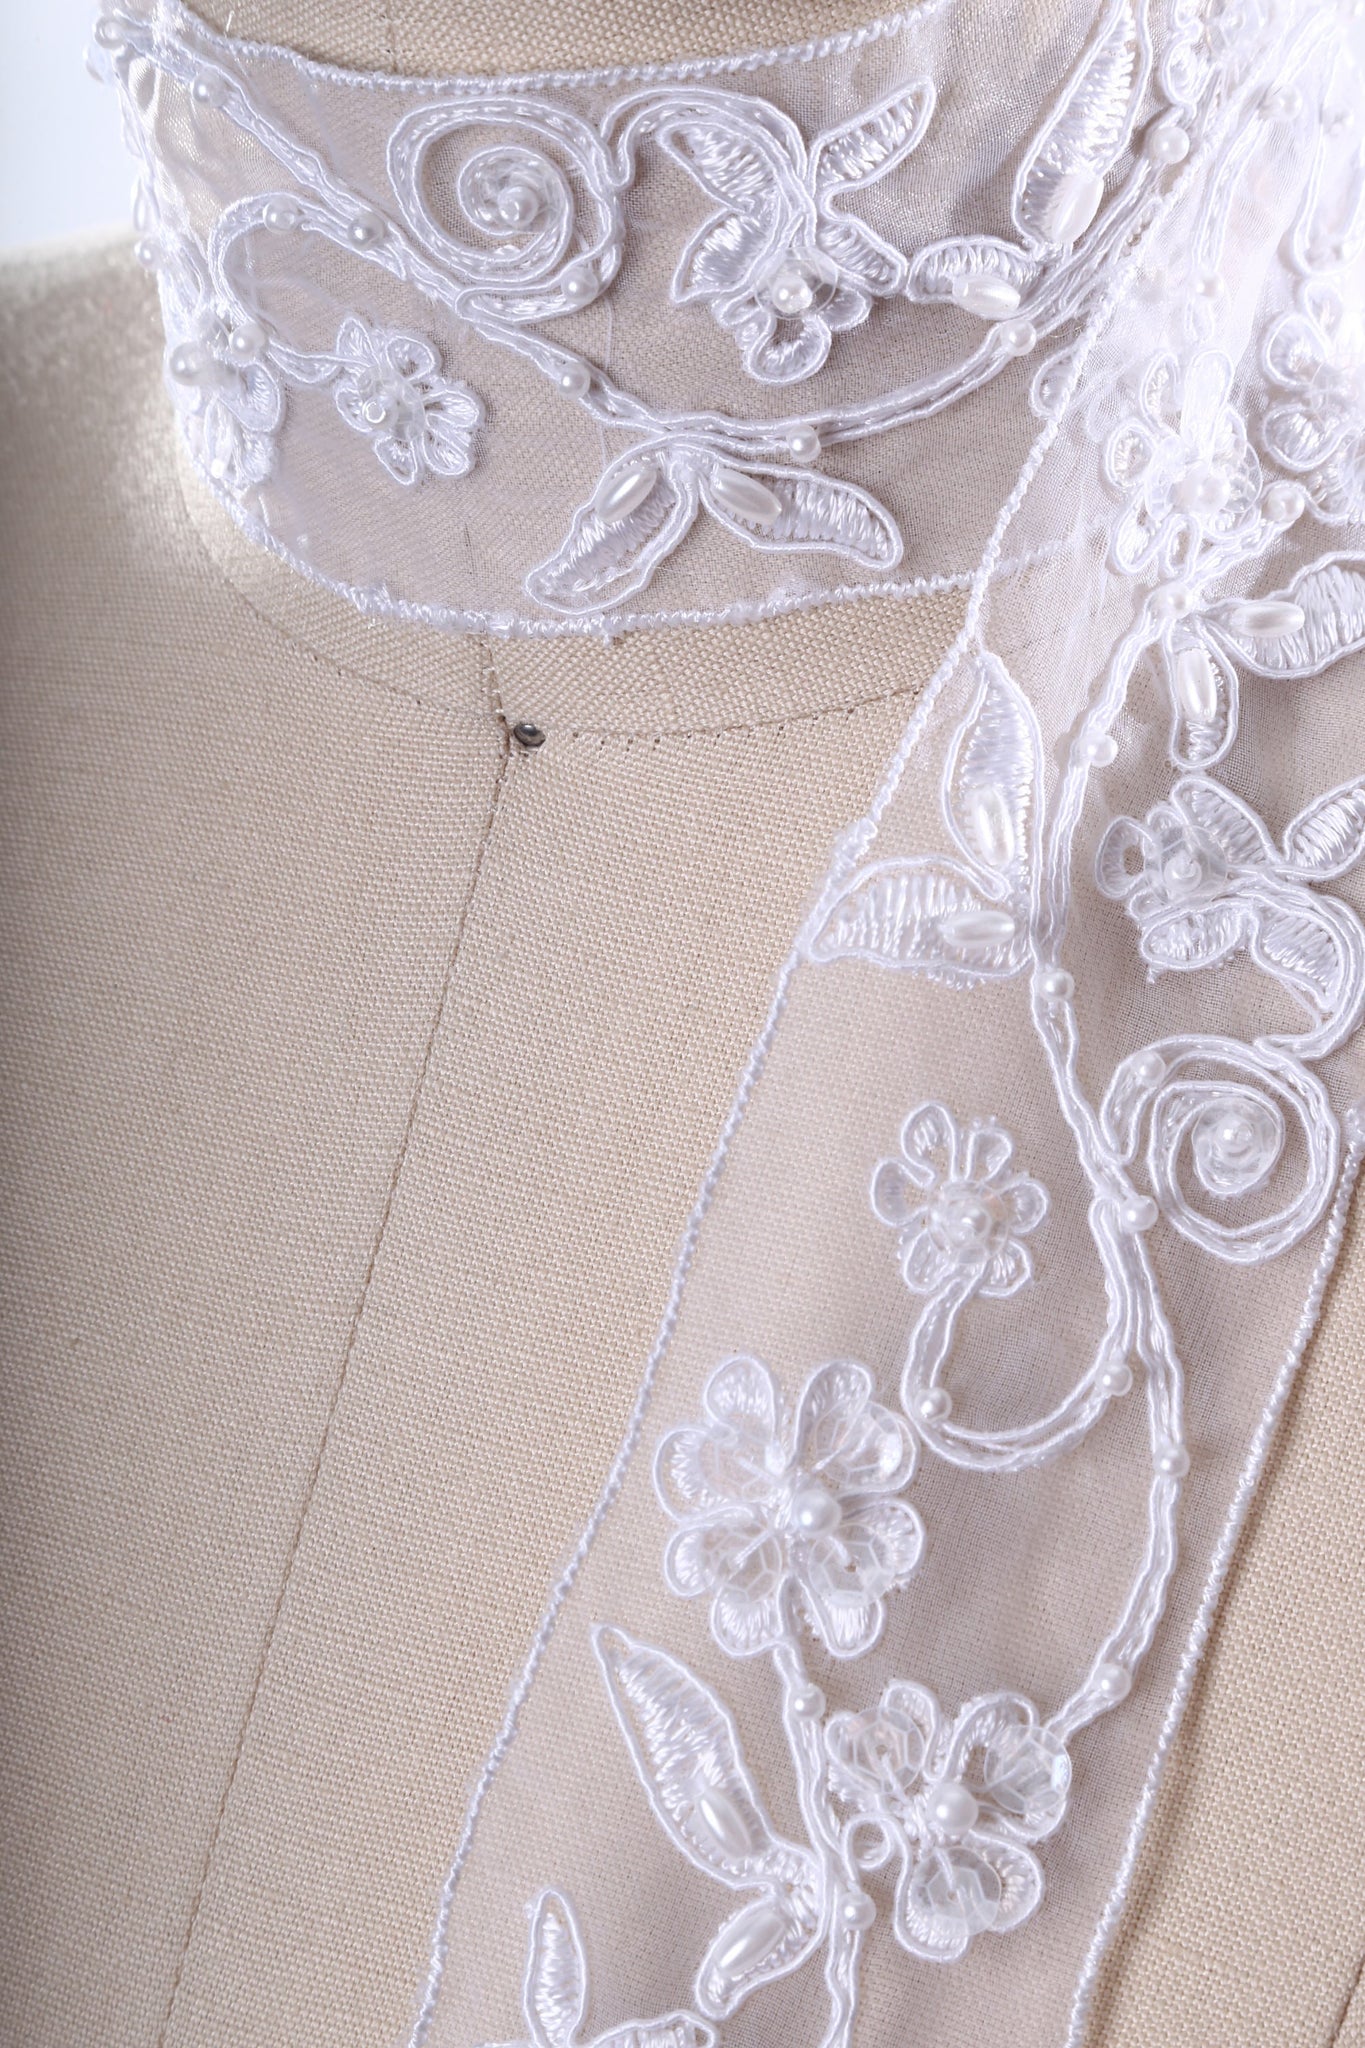 1 Yard White Beaded Flower and Swirl Delicate Chiffon Bridal Versatile Lace Trim